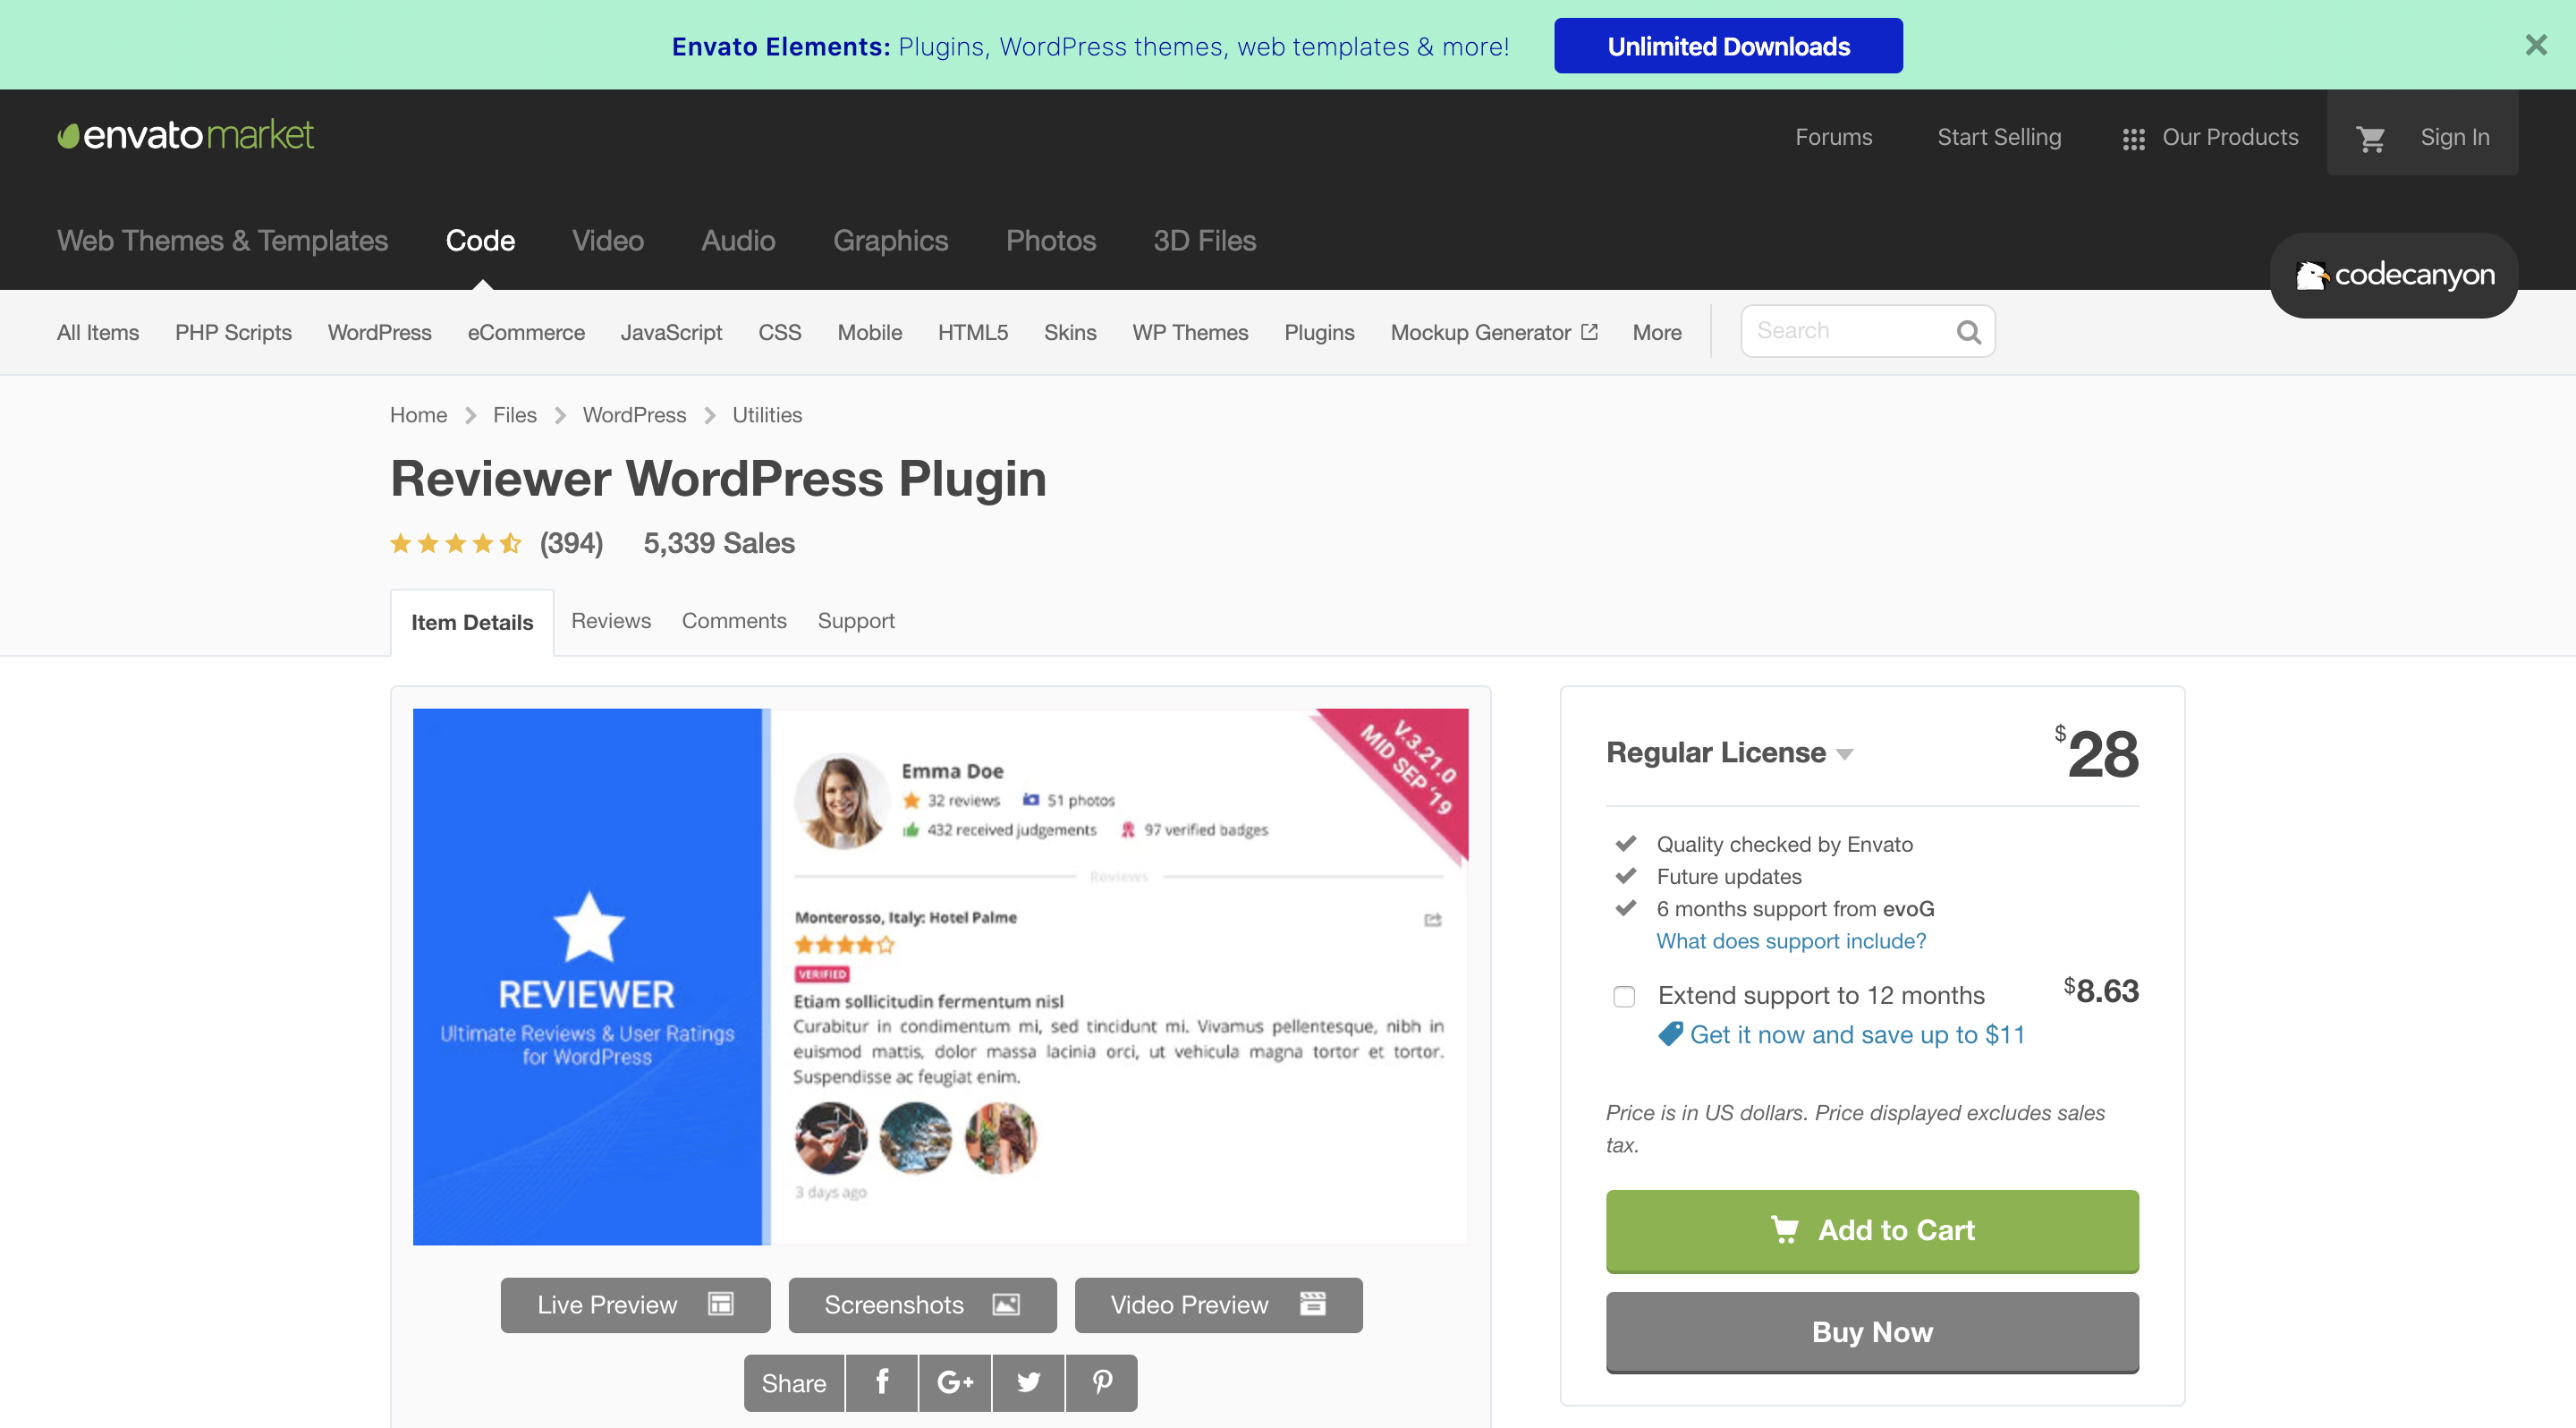 Reviewer WordPress Plugin